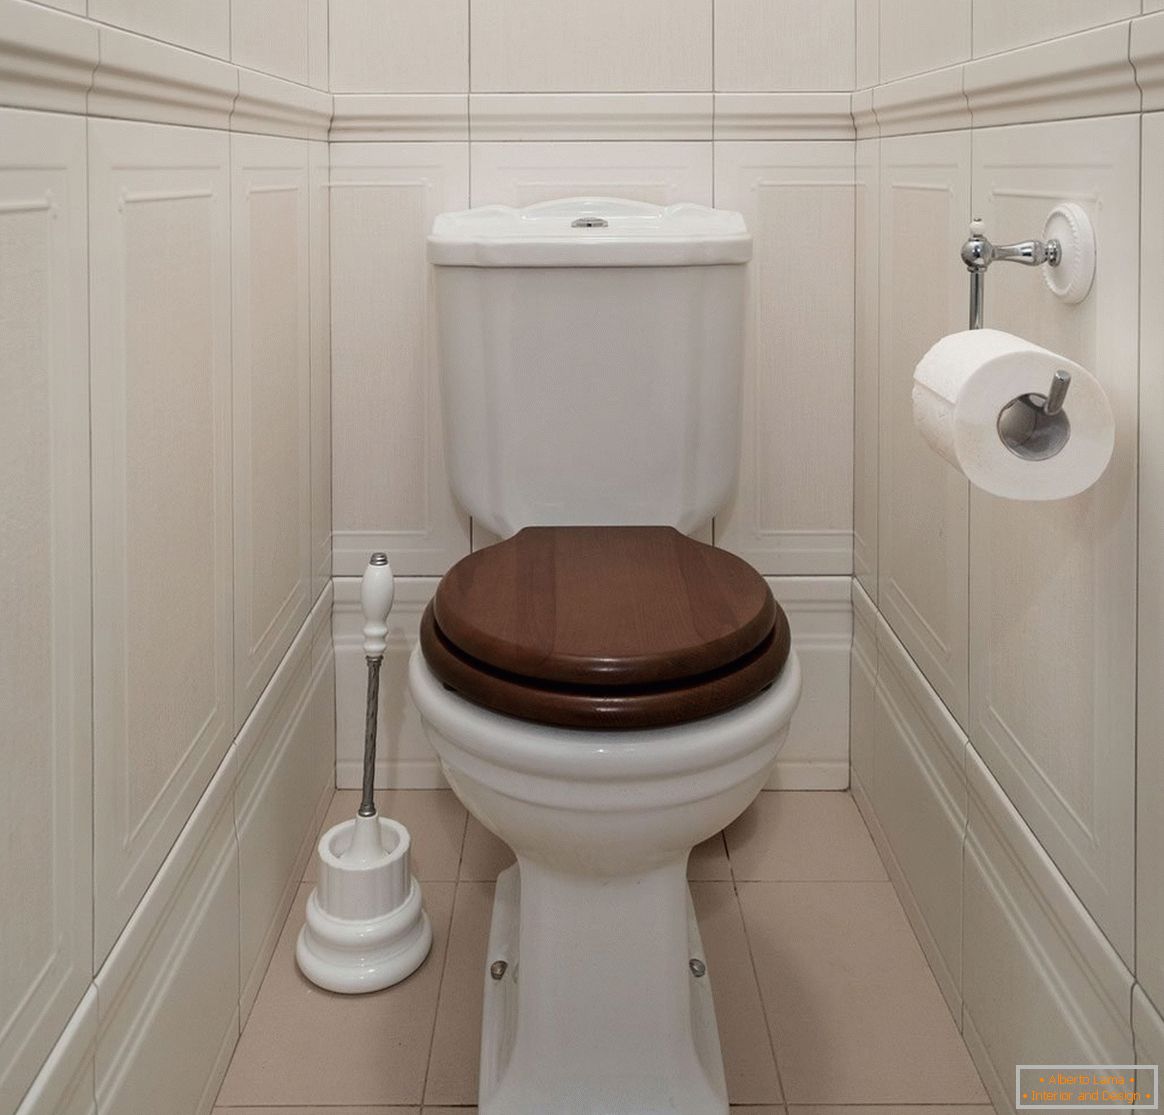 White tile in the toilet